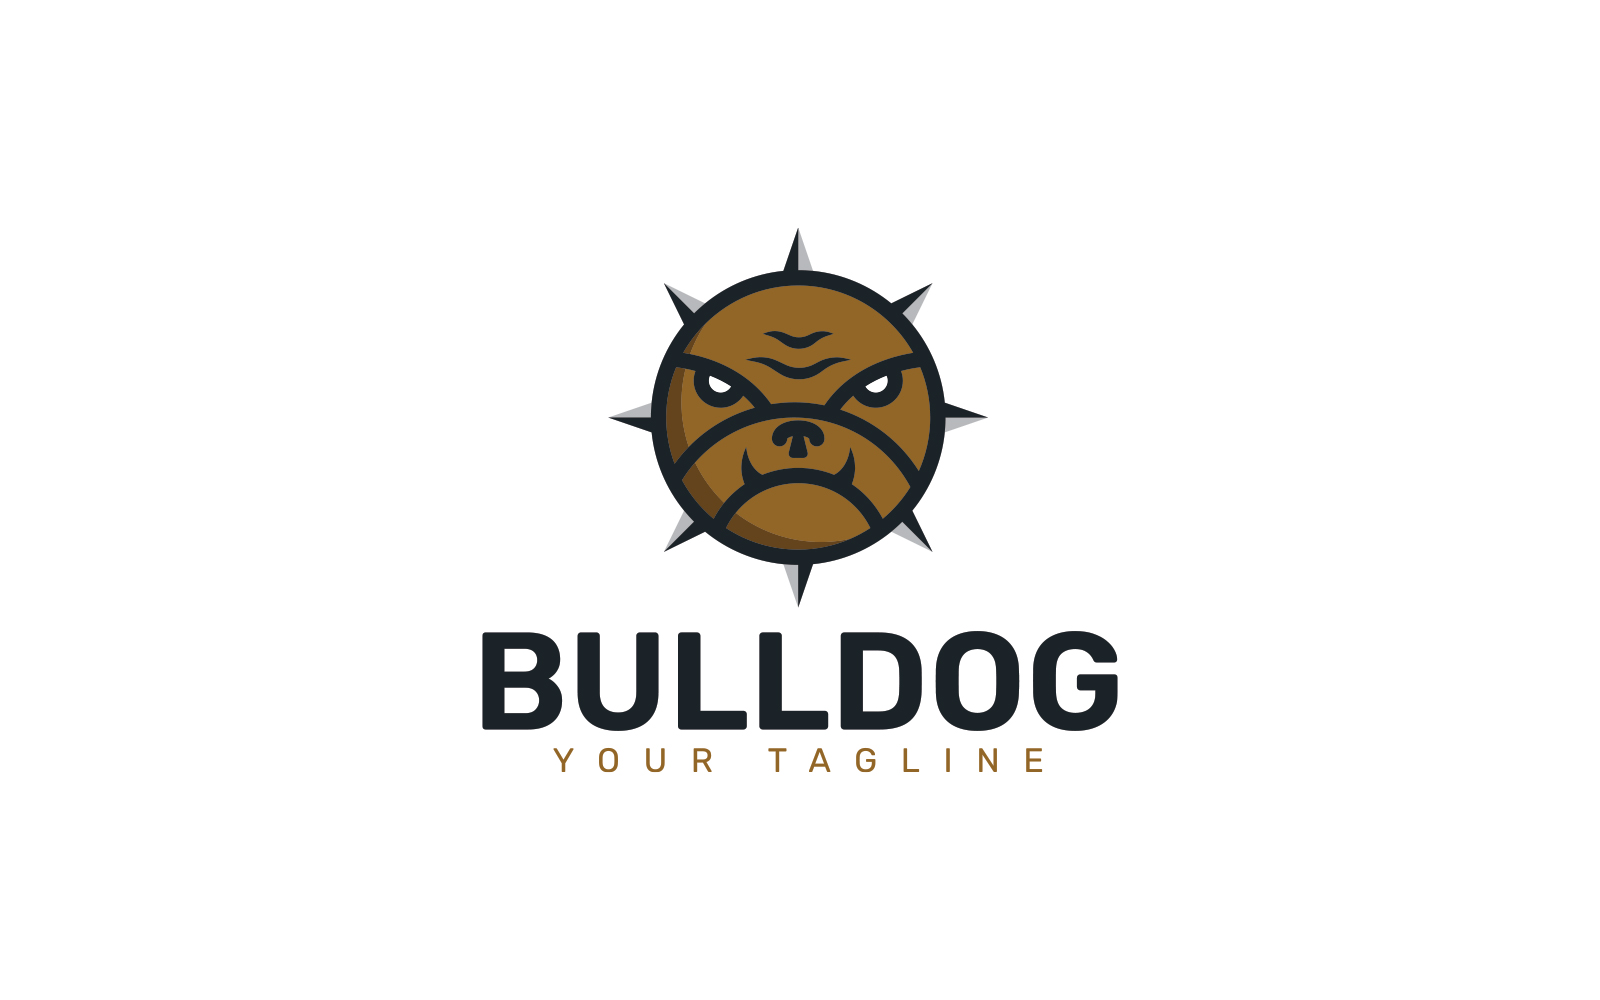 Premium Bulldog Logo Template